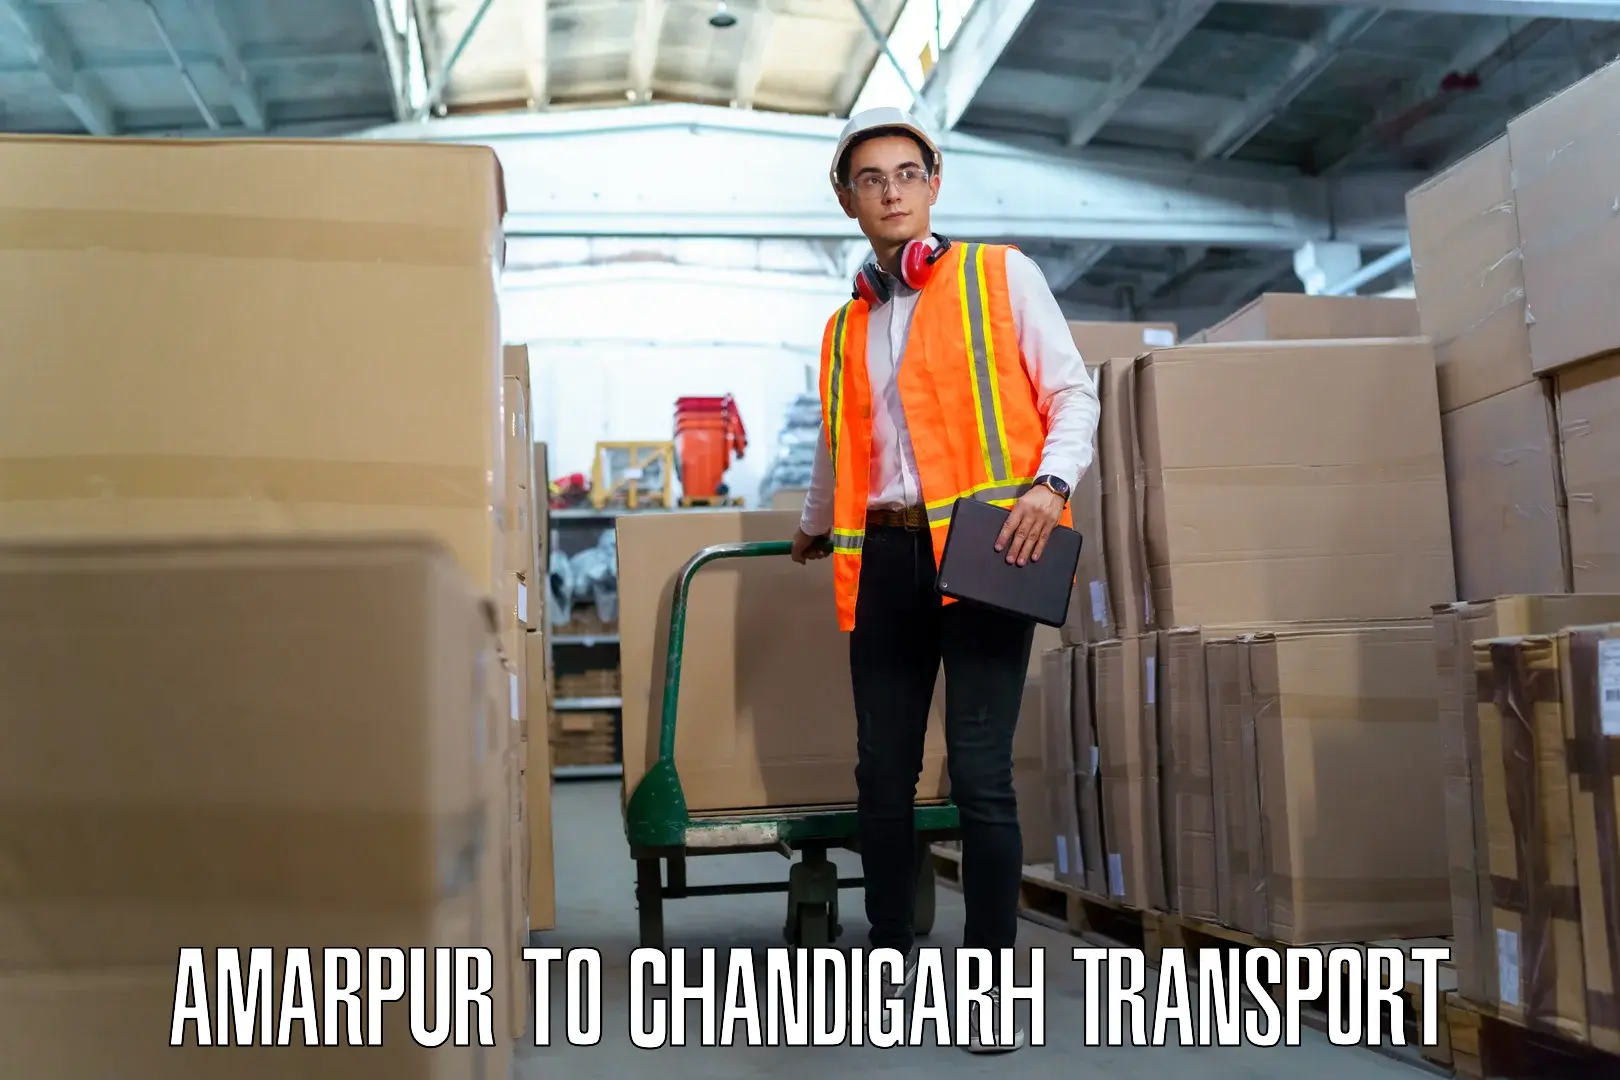 Furniture transport service Amarpur to Chandigarh